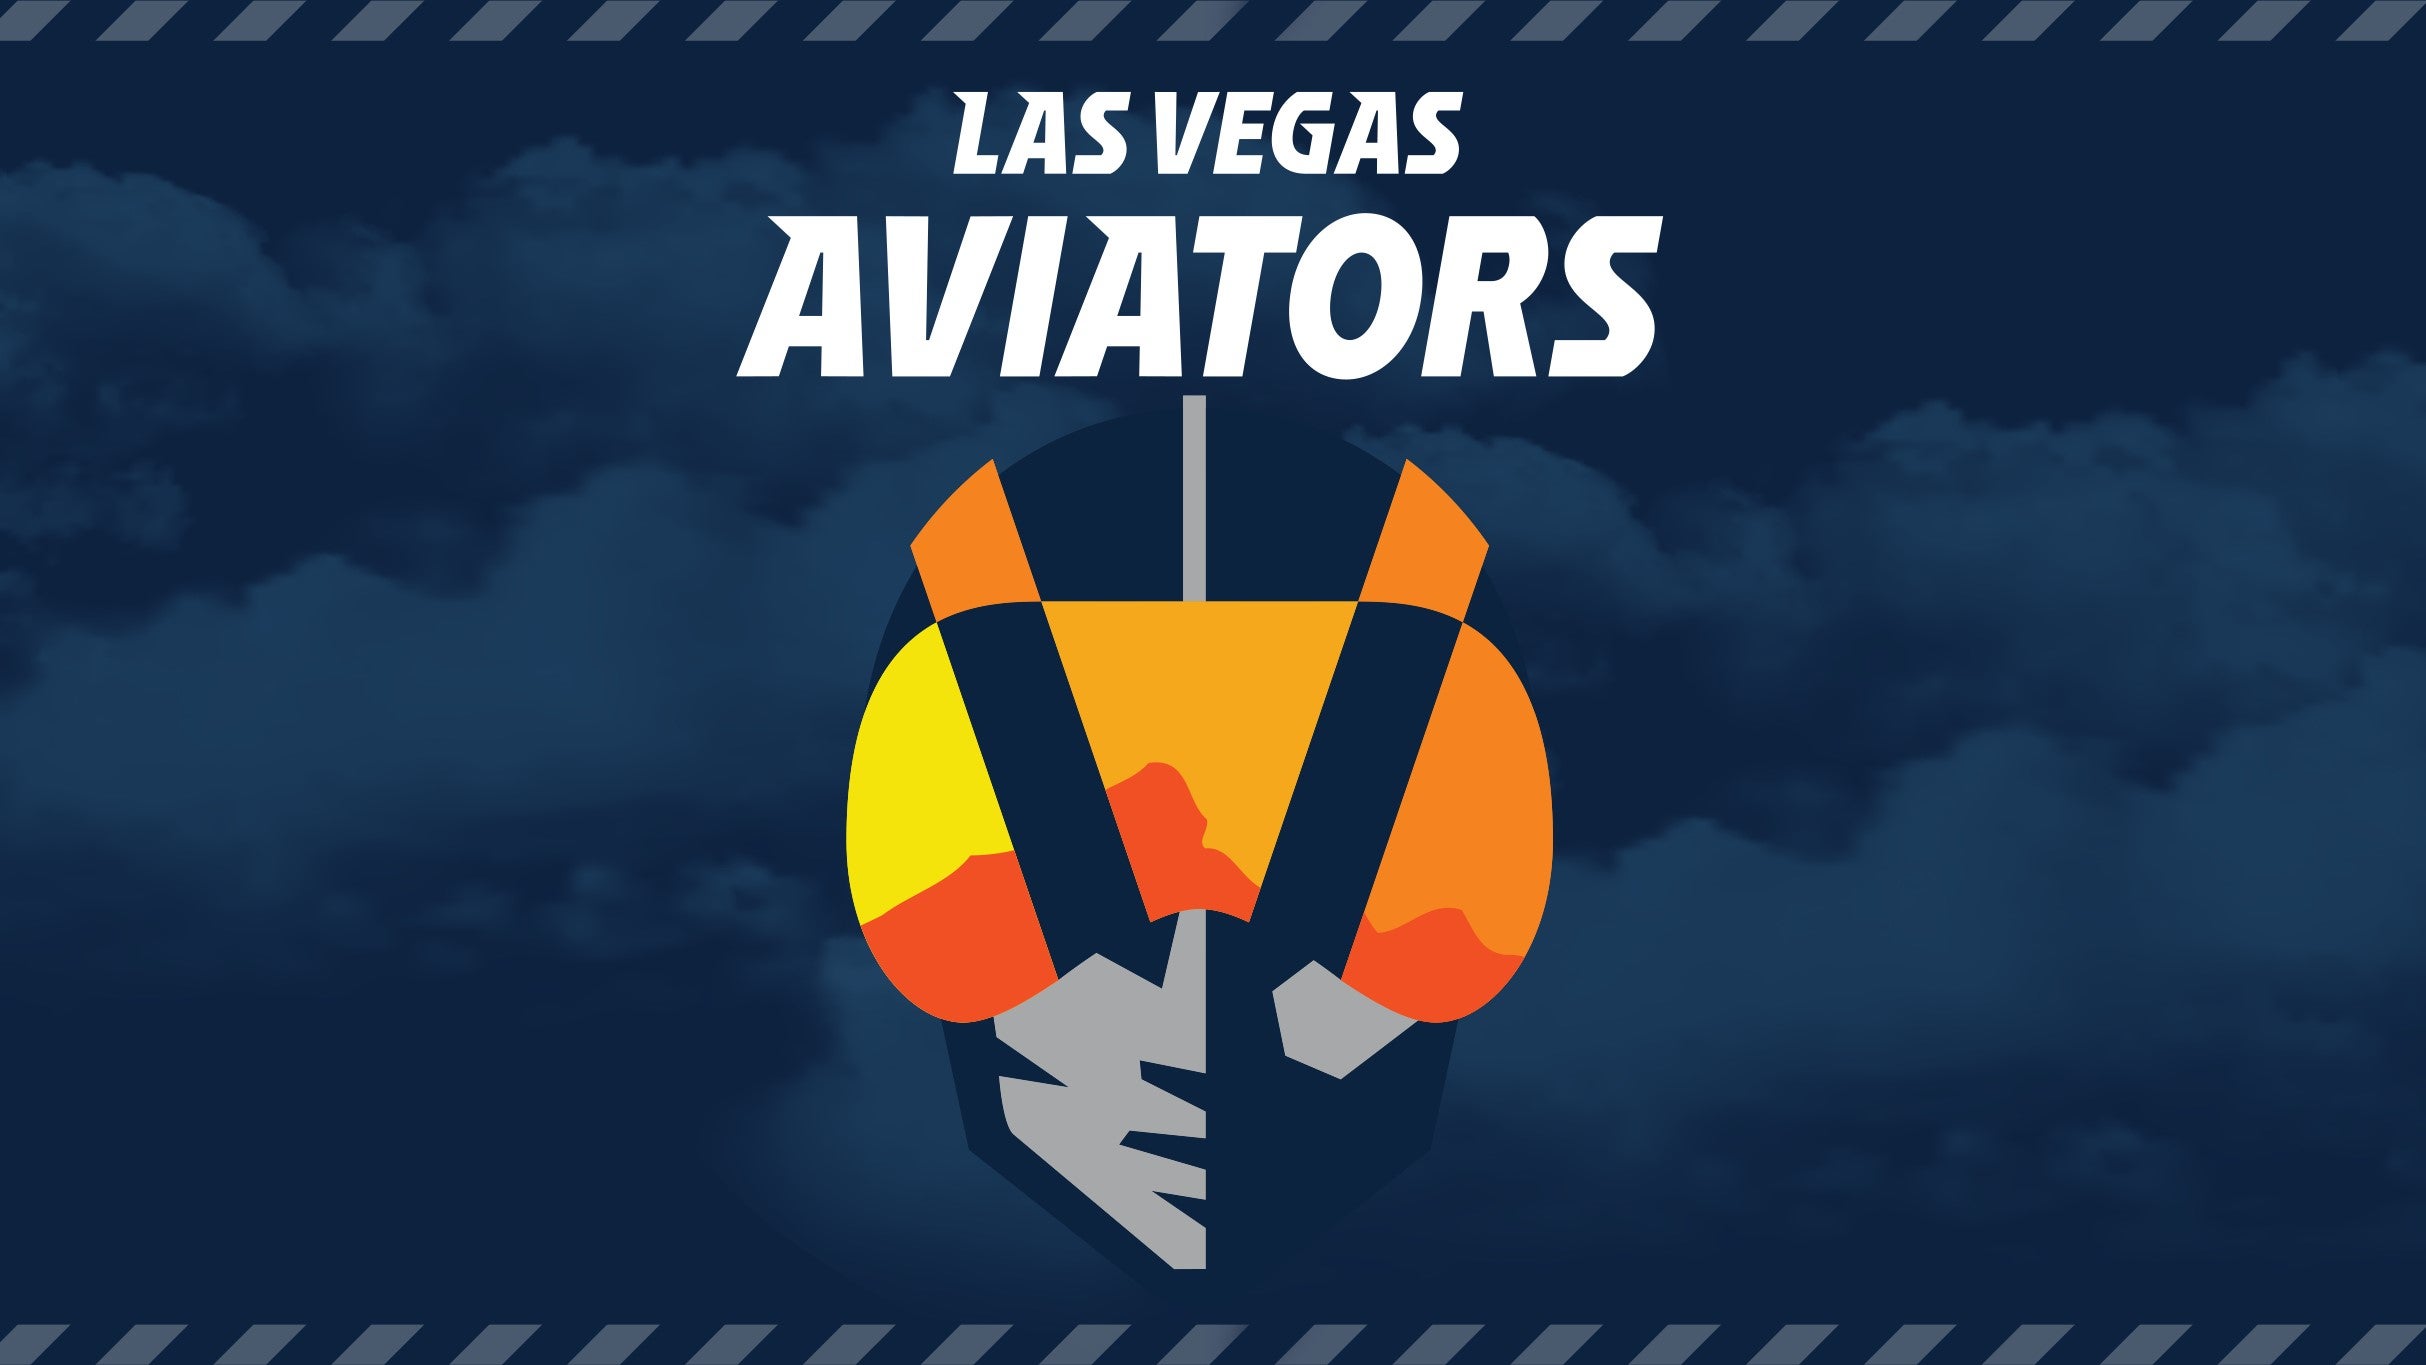 Las Vegas Aviators vs. Oklahoma City Baseball Club Las Vegas